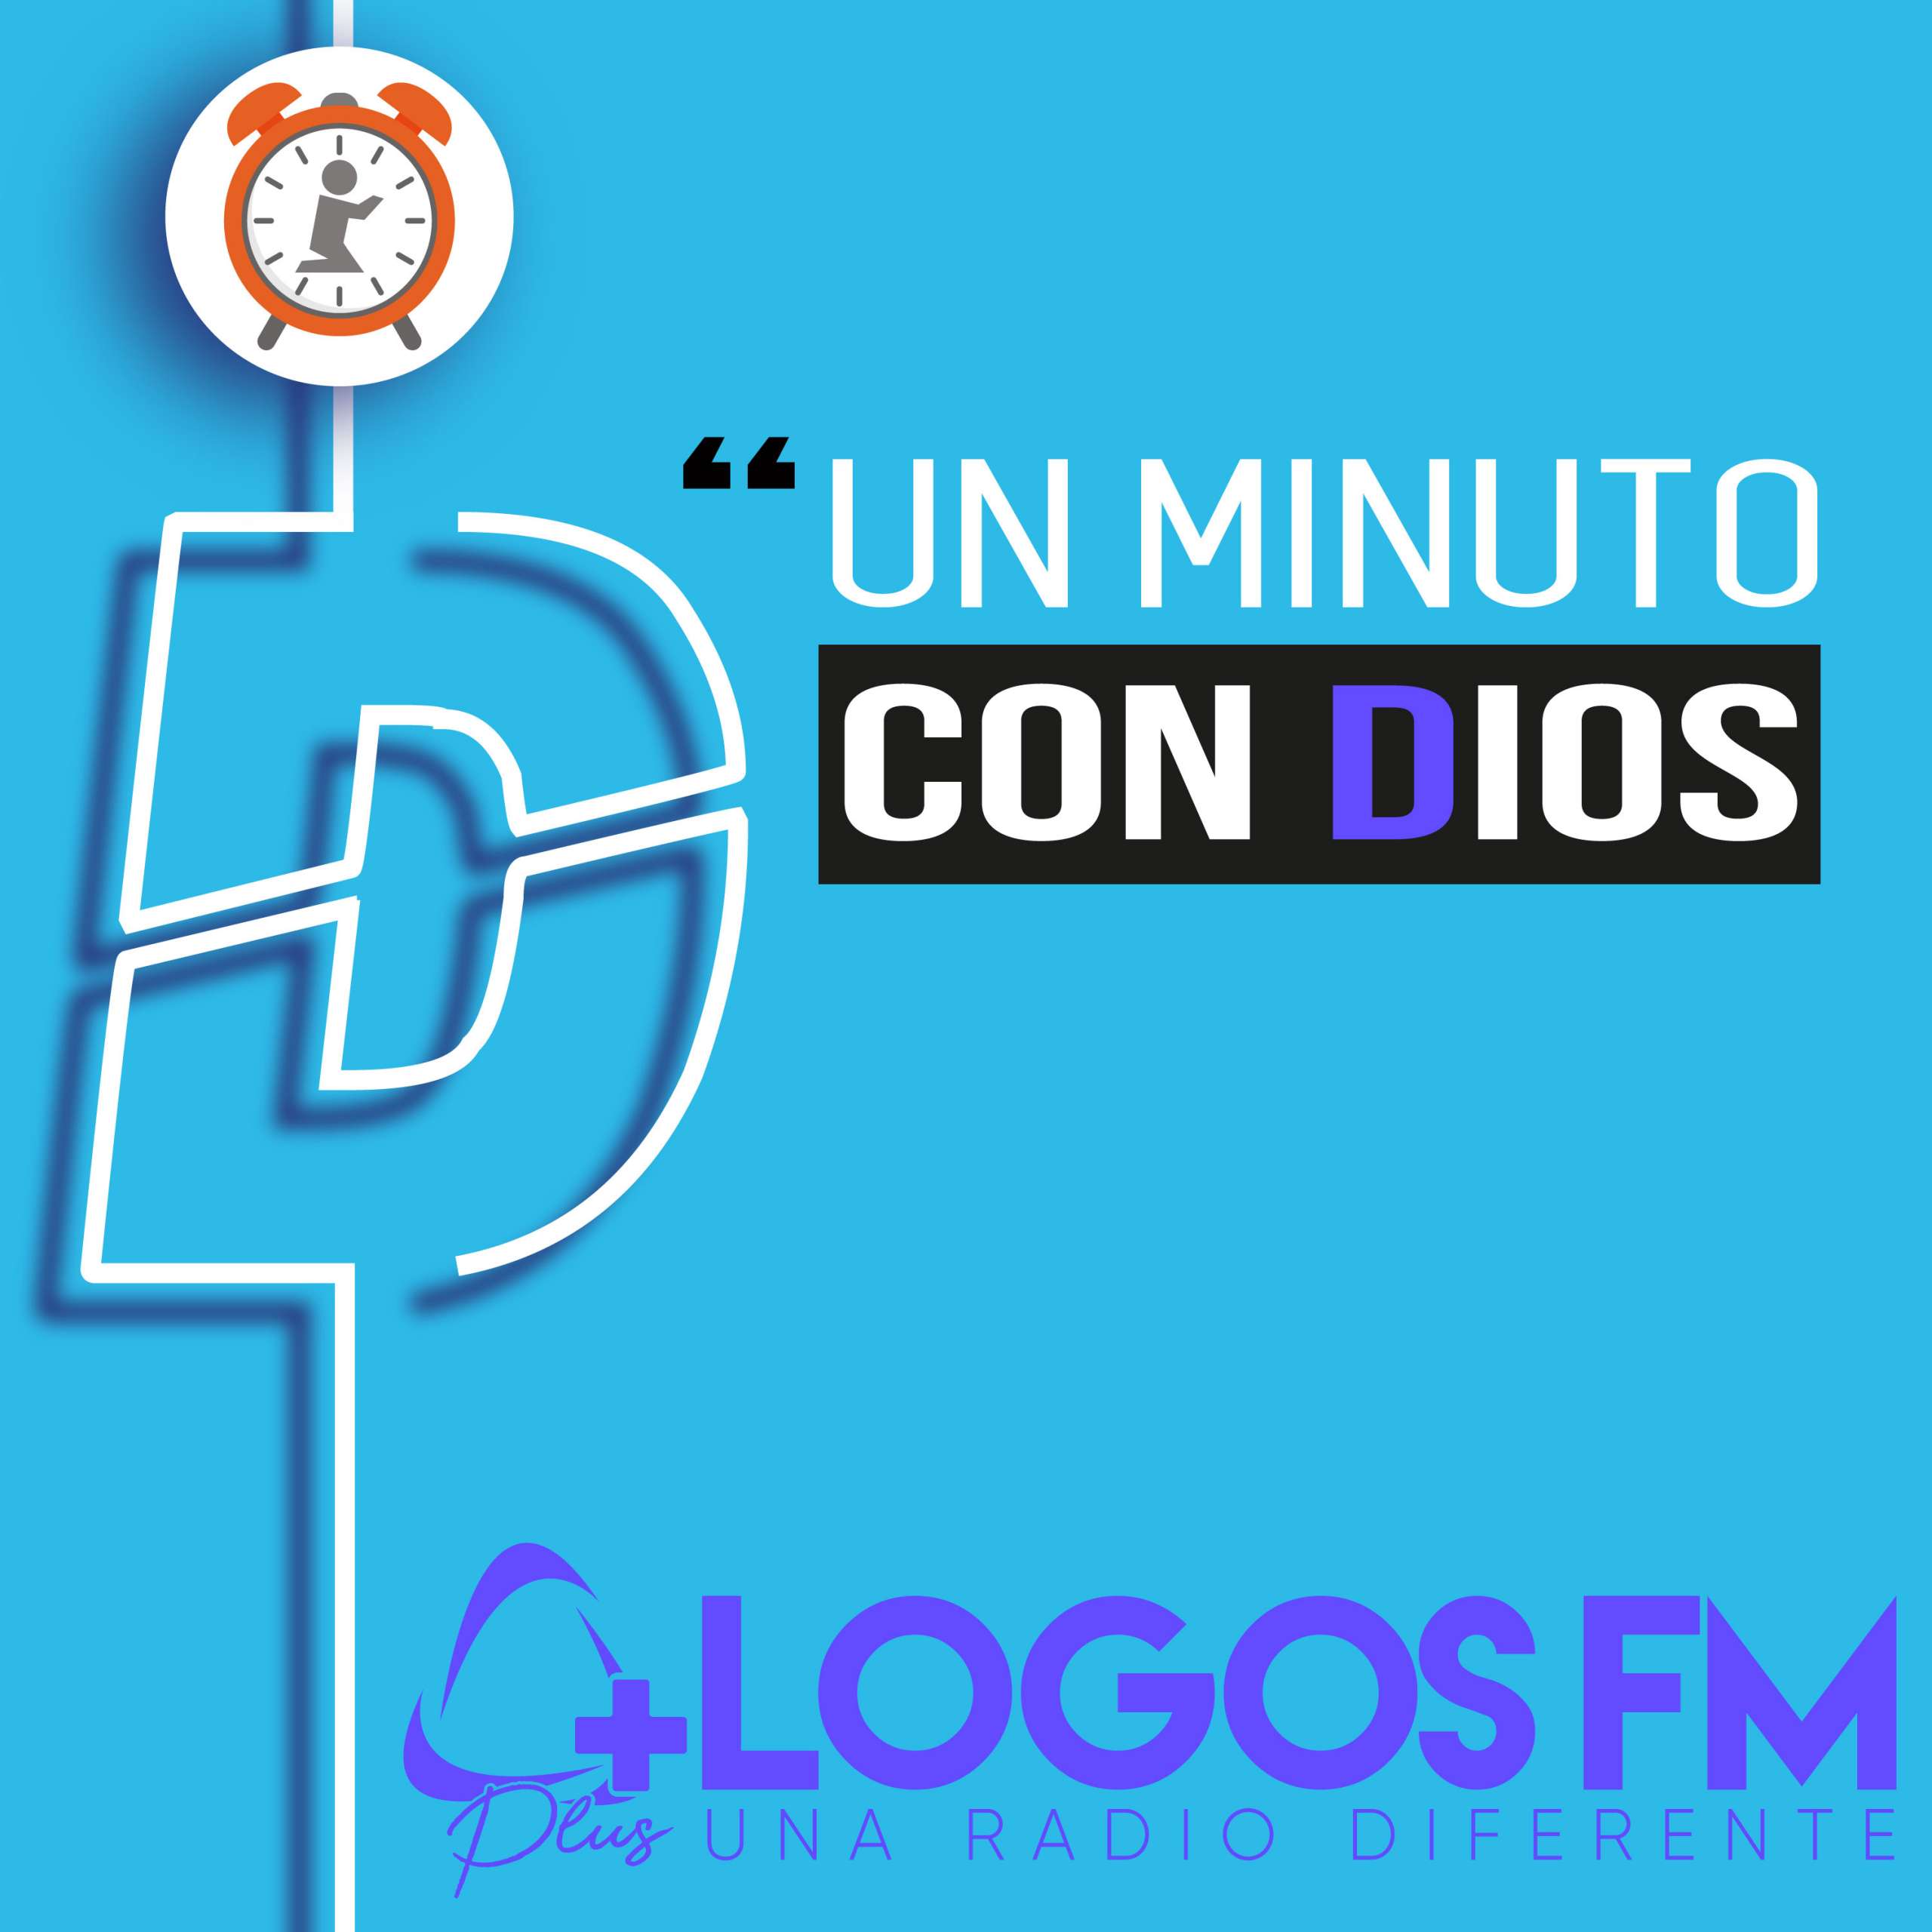 Un minuto con Dios - Episodio 358 - Juan José Ordoñez